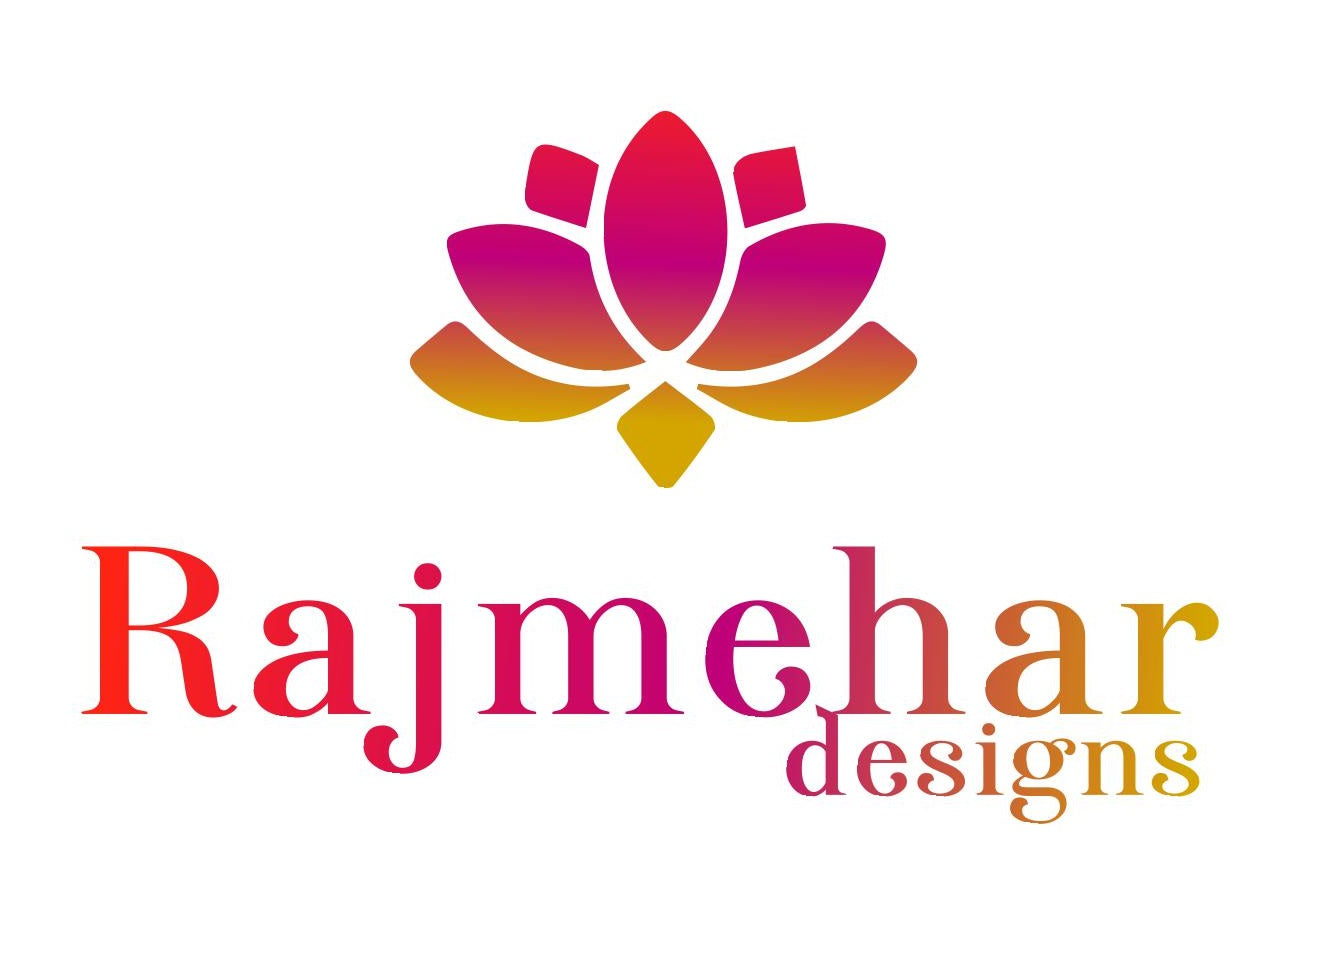 Rajmehar Designs Logo